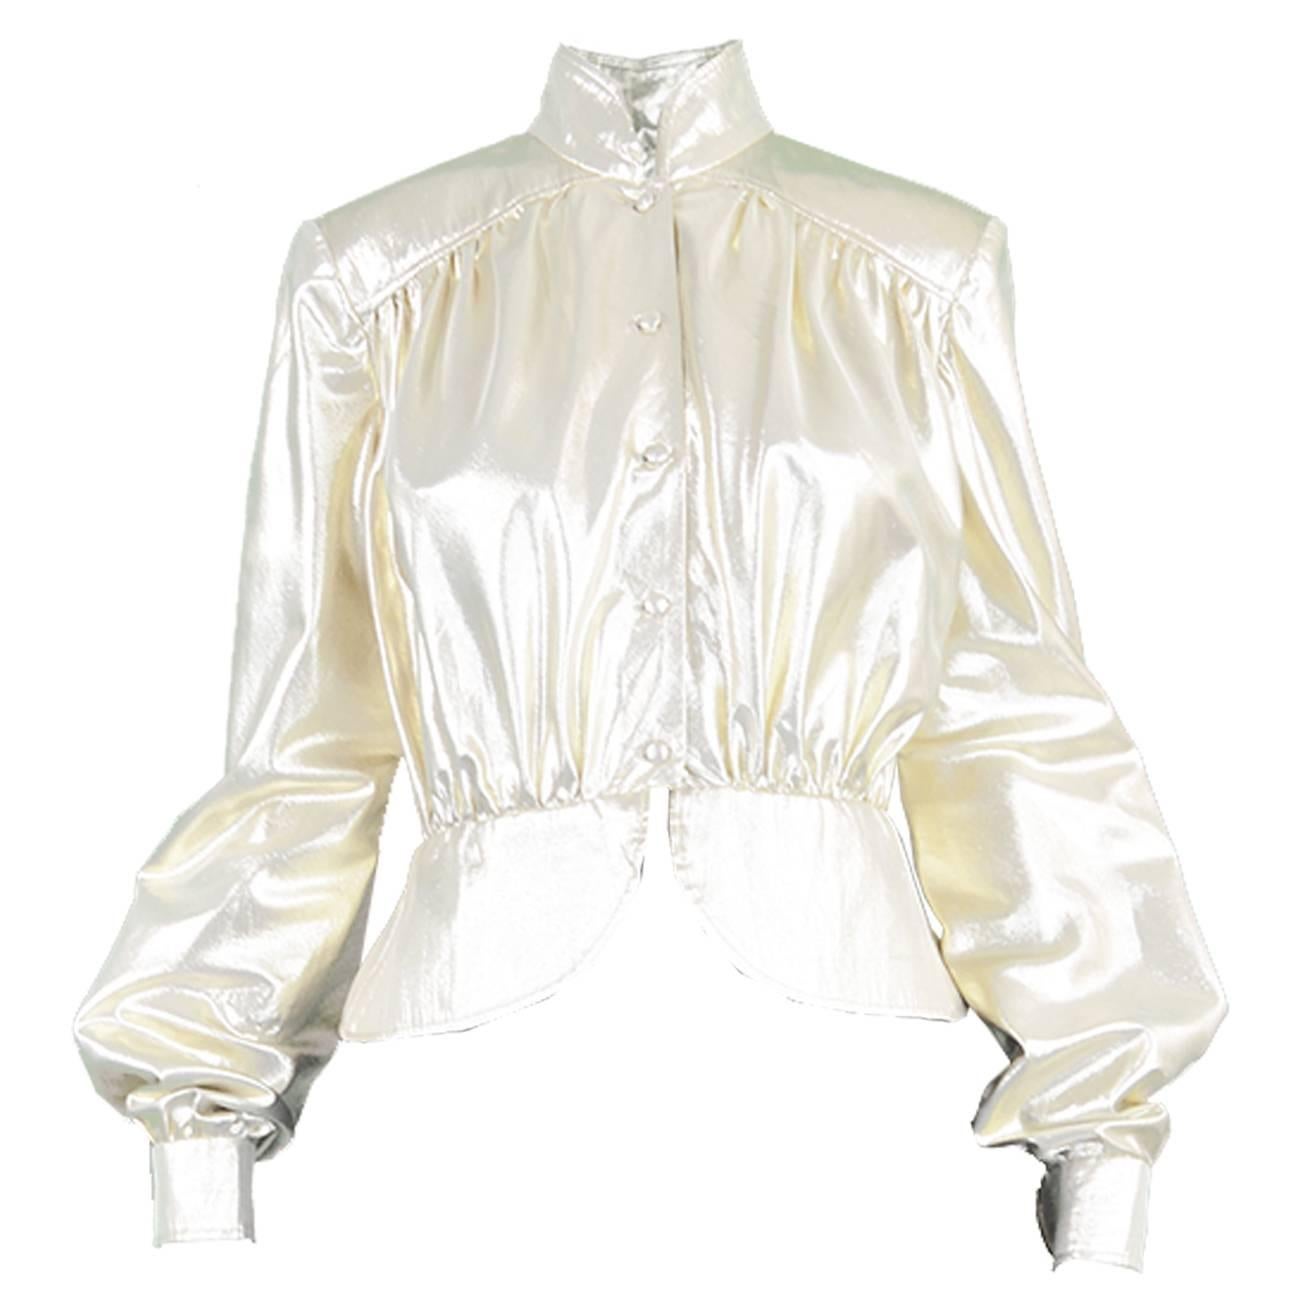 Yuki of London Metallic Pale Gold Lamé Jacket, 1970s